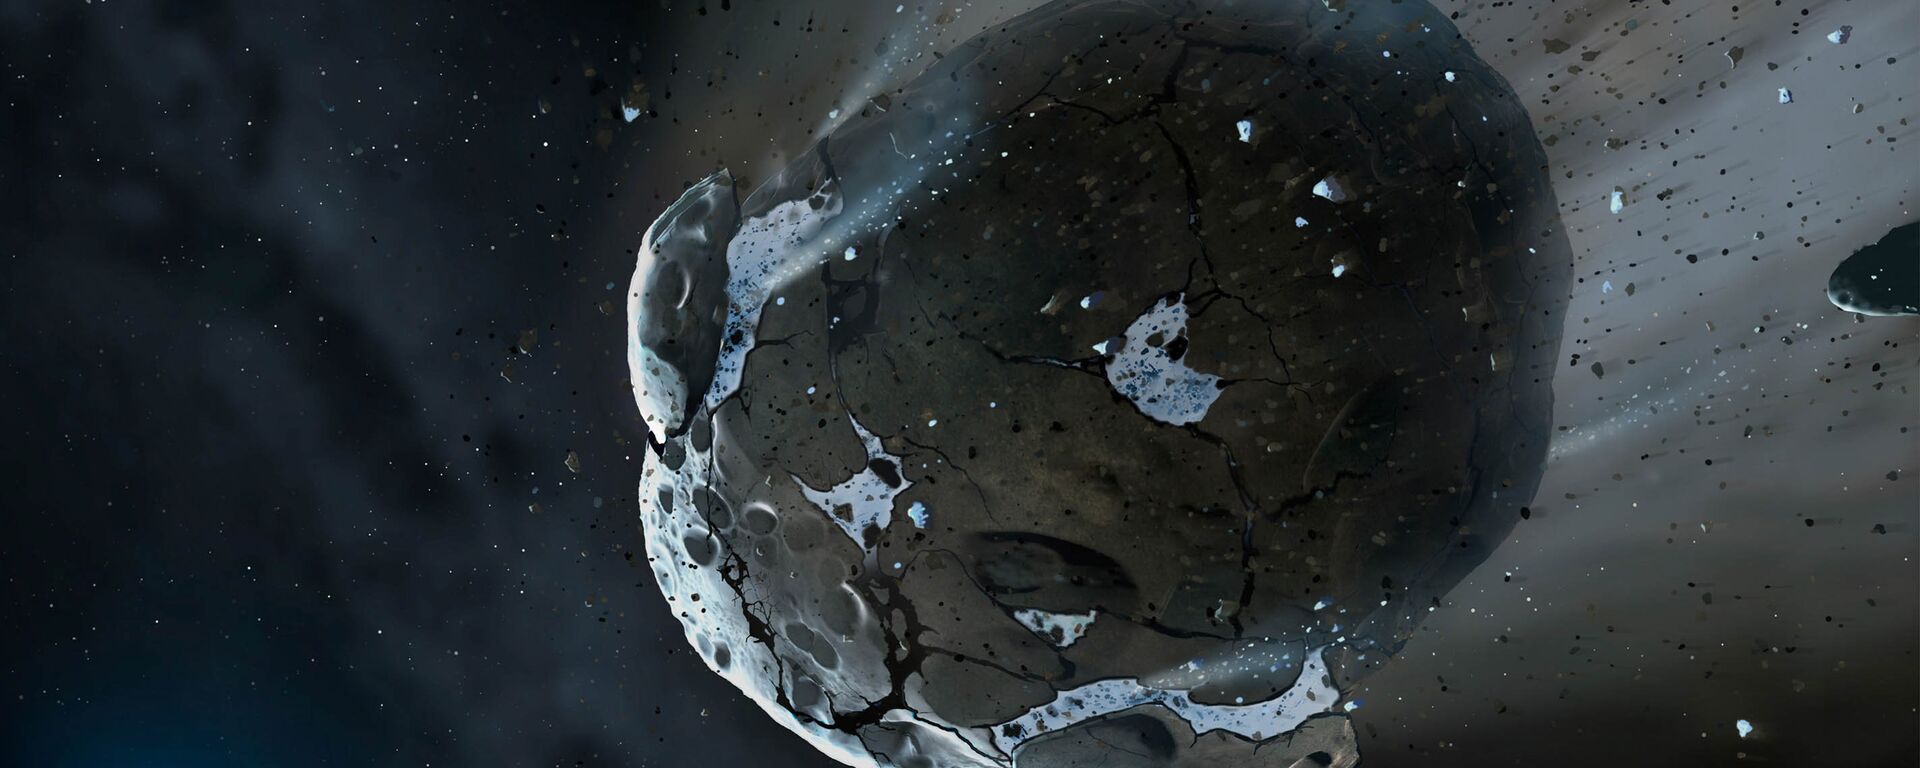 Иллюстрация астероида  - Sputnik Таджикистан, 1920, 17.12.2020